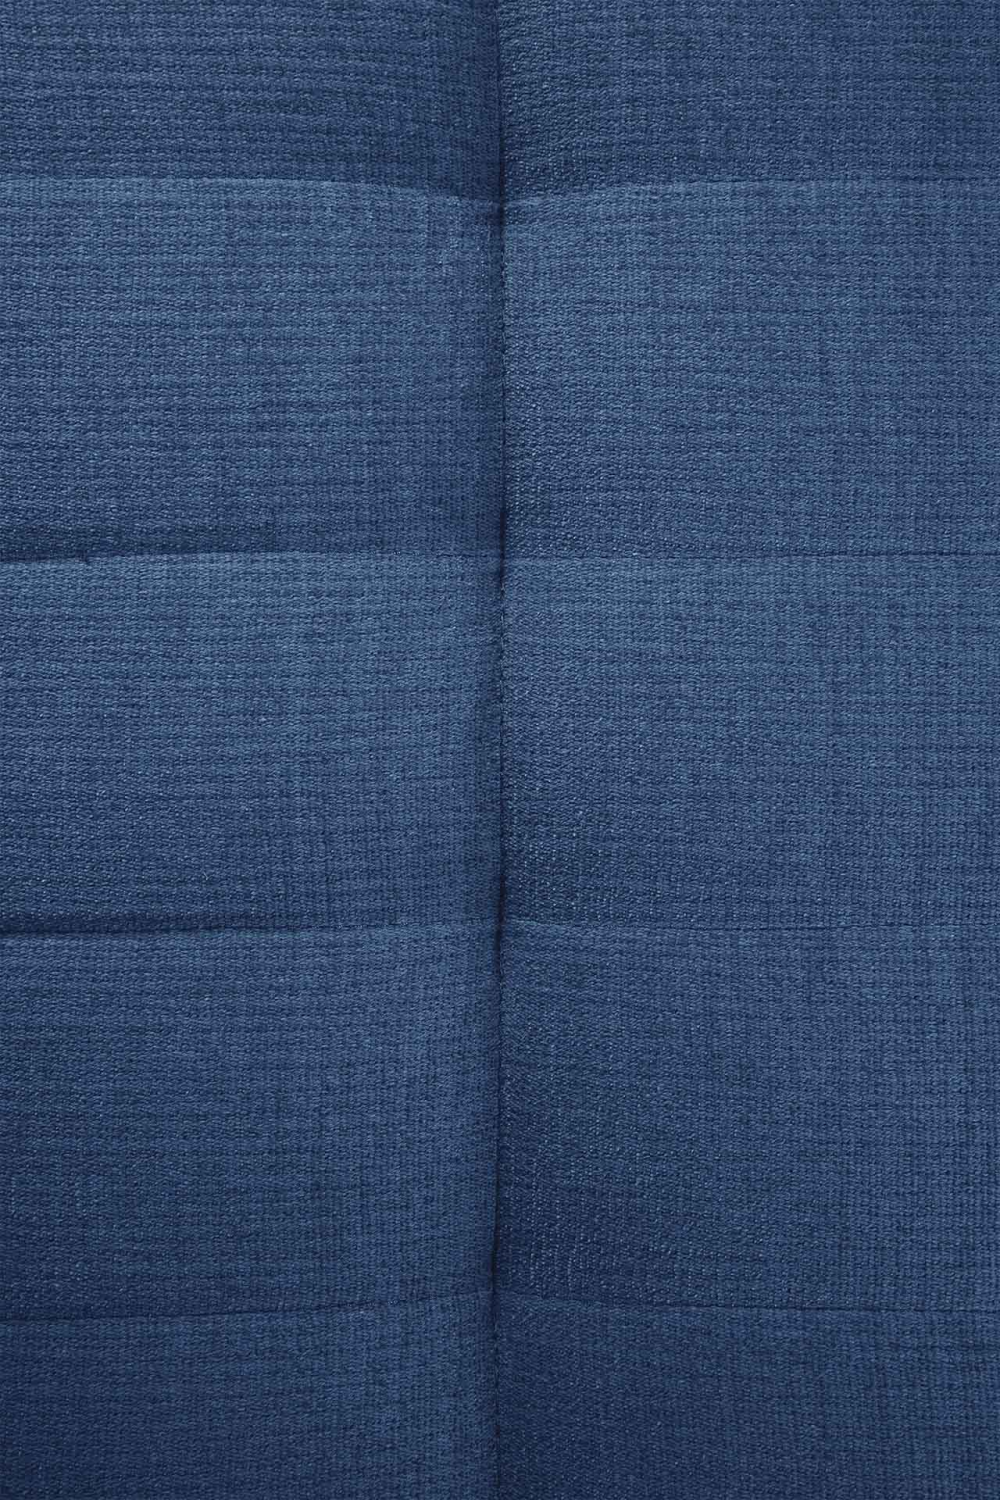 Blue Modular Sofa | Ethnicraft N701 | Oroa.com